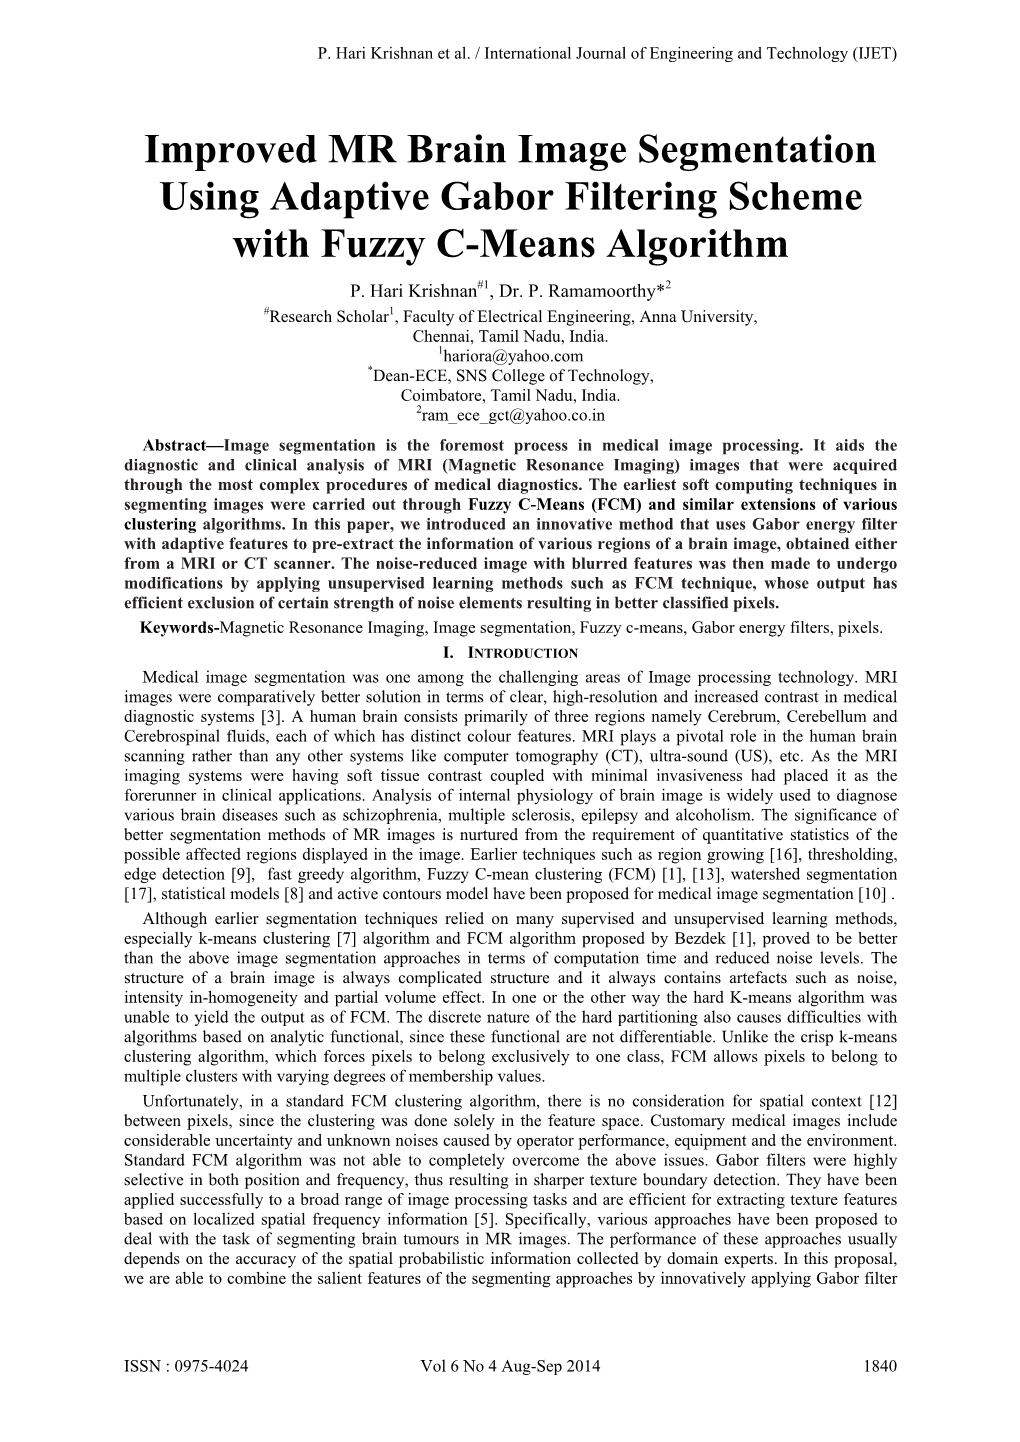 Improved MR Brain Image Segmentation Using Adaptive Gabor Filtering Scheme with Fuzzy C-Means Algorithm P